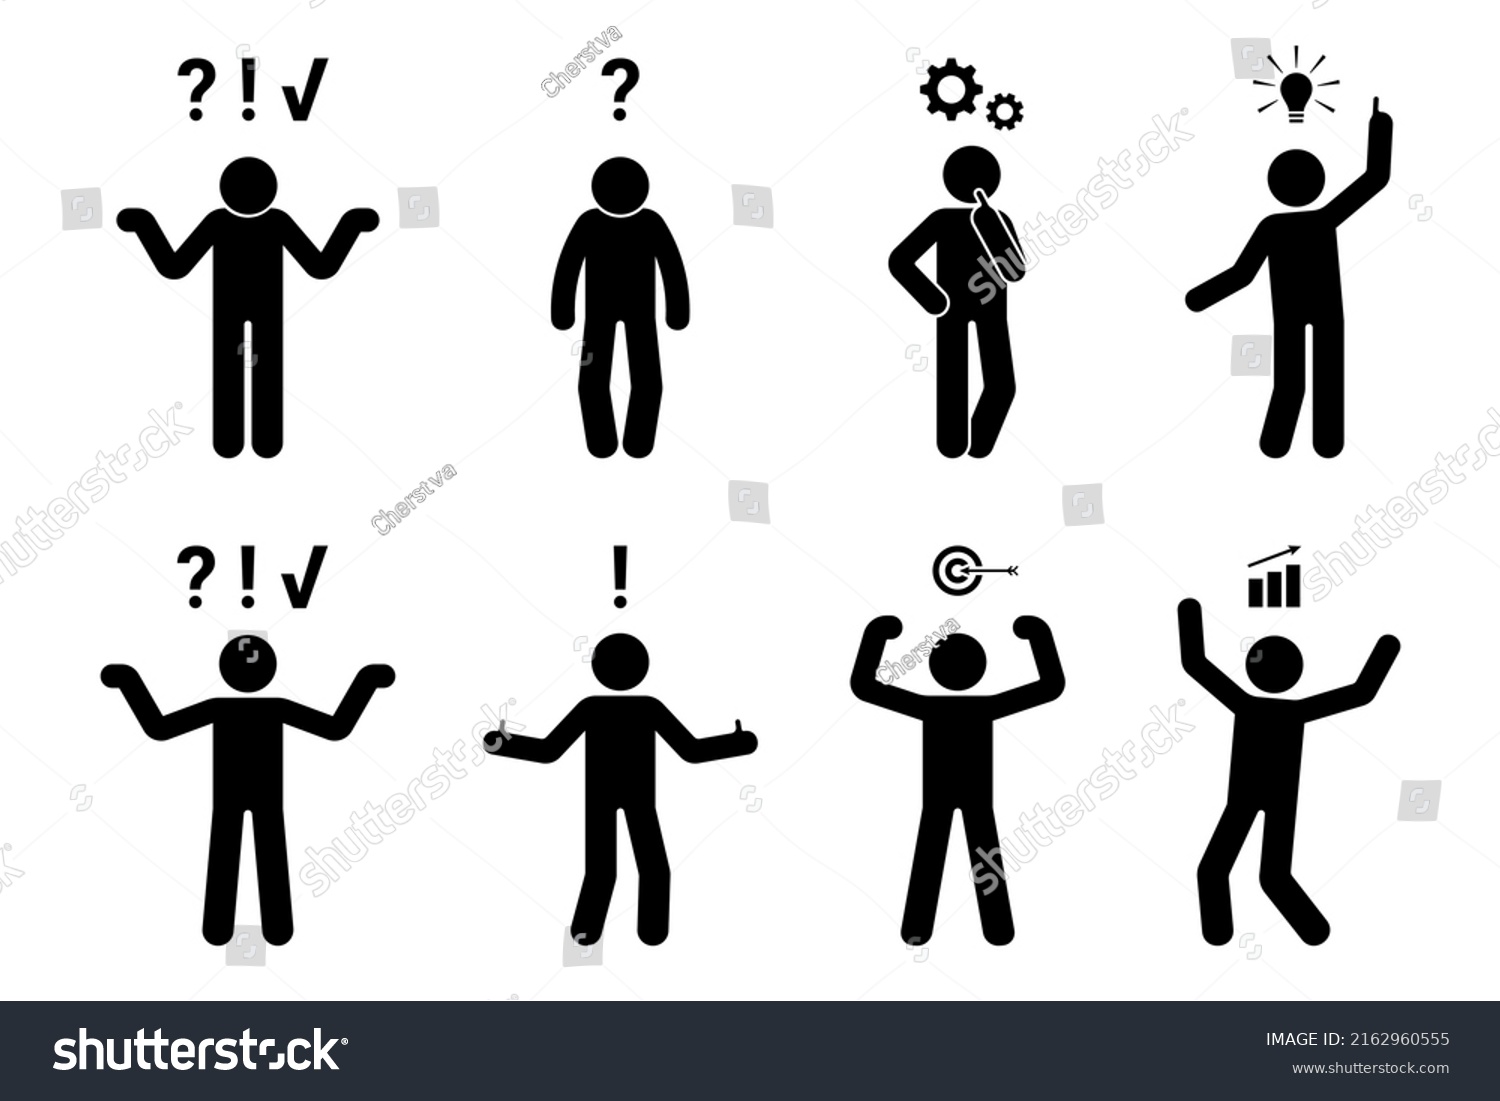 Stick figure man problem solution concept vector illustration set. Creative idea insight icon silhouette pictogram #2162960555